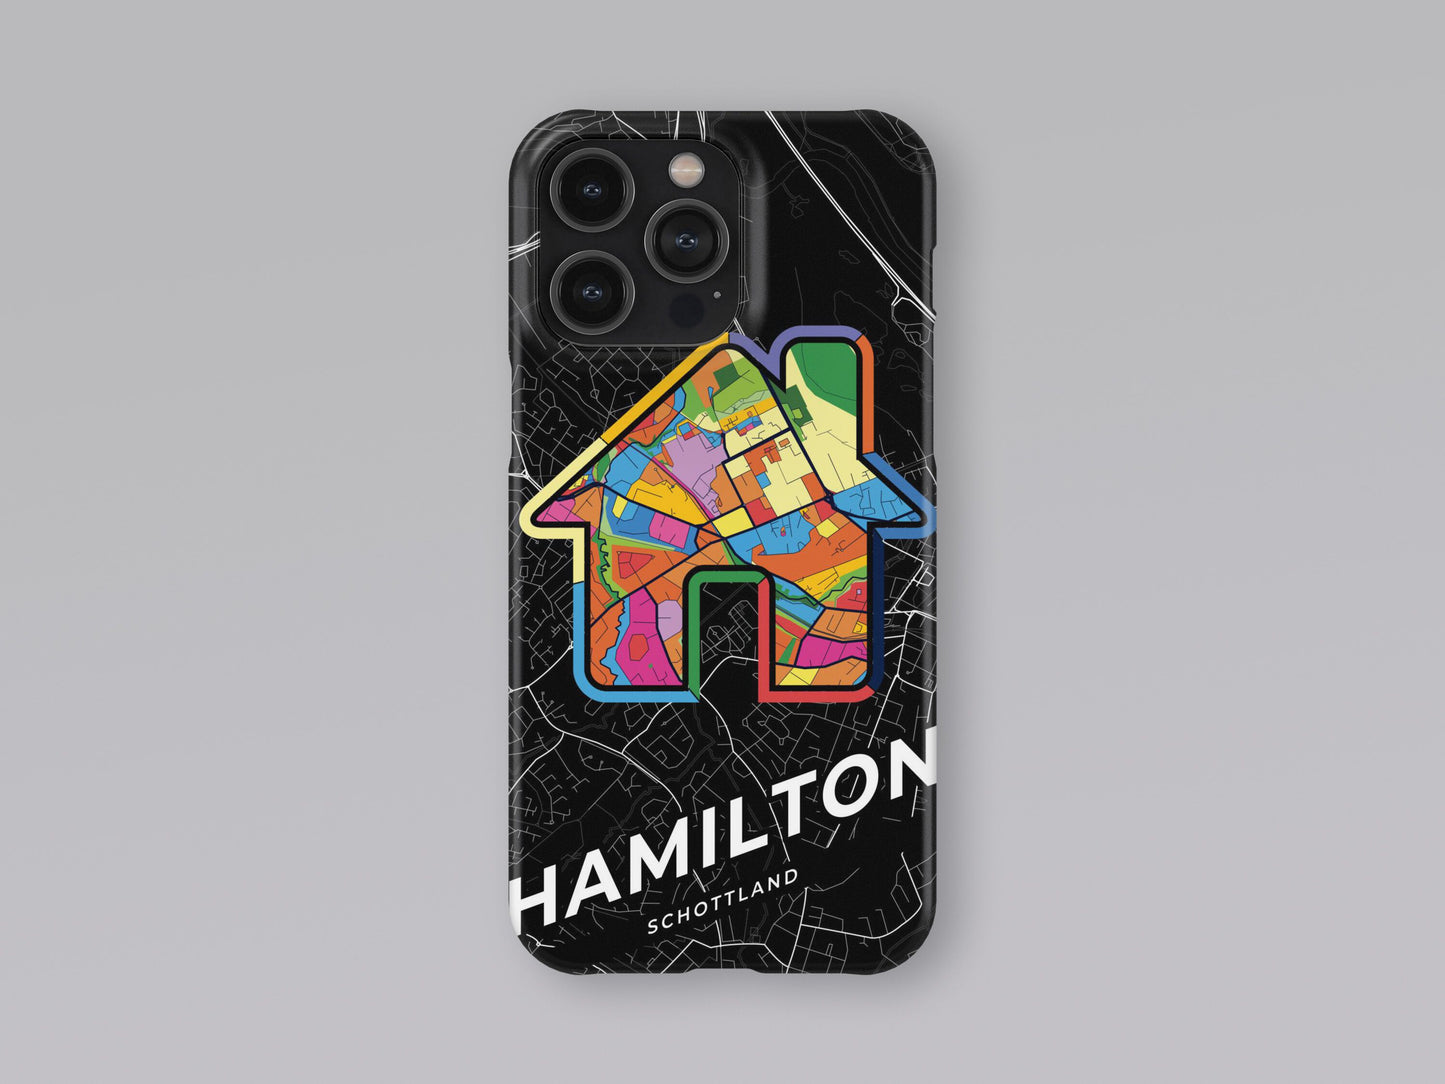 Hamilton Scotland slim phone case with colorful icon. Birthday, wedding or housewarming gift. Couple match cases. 3